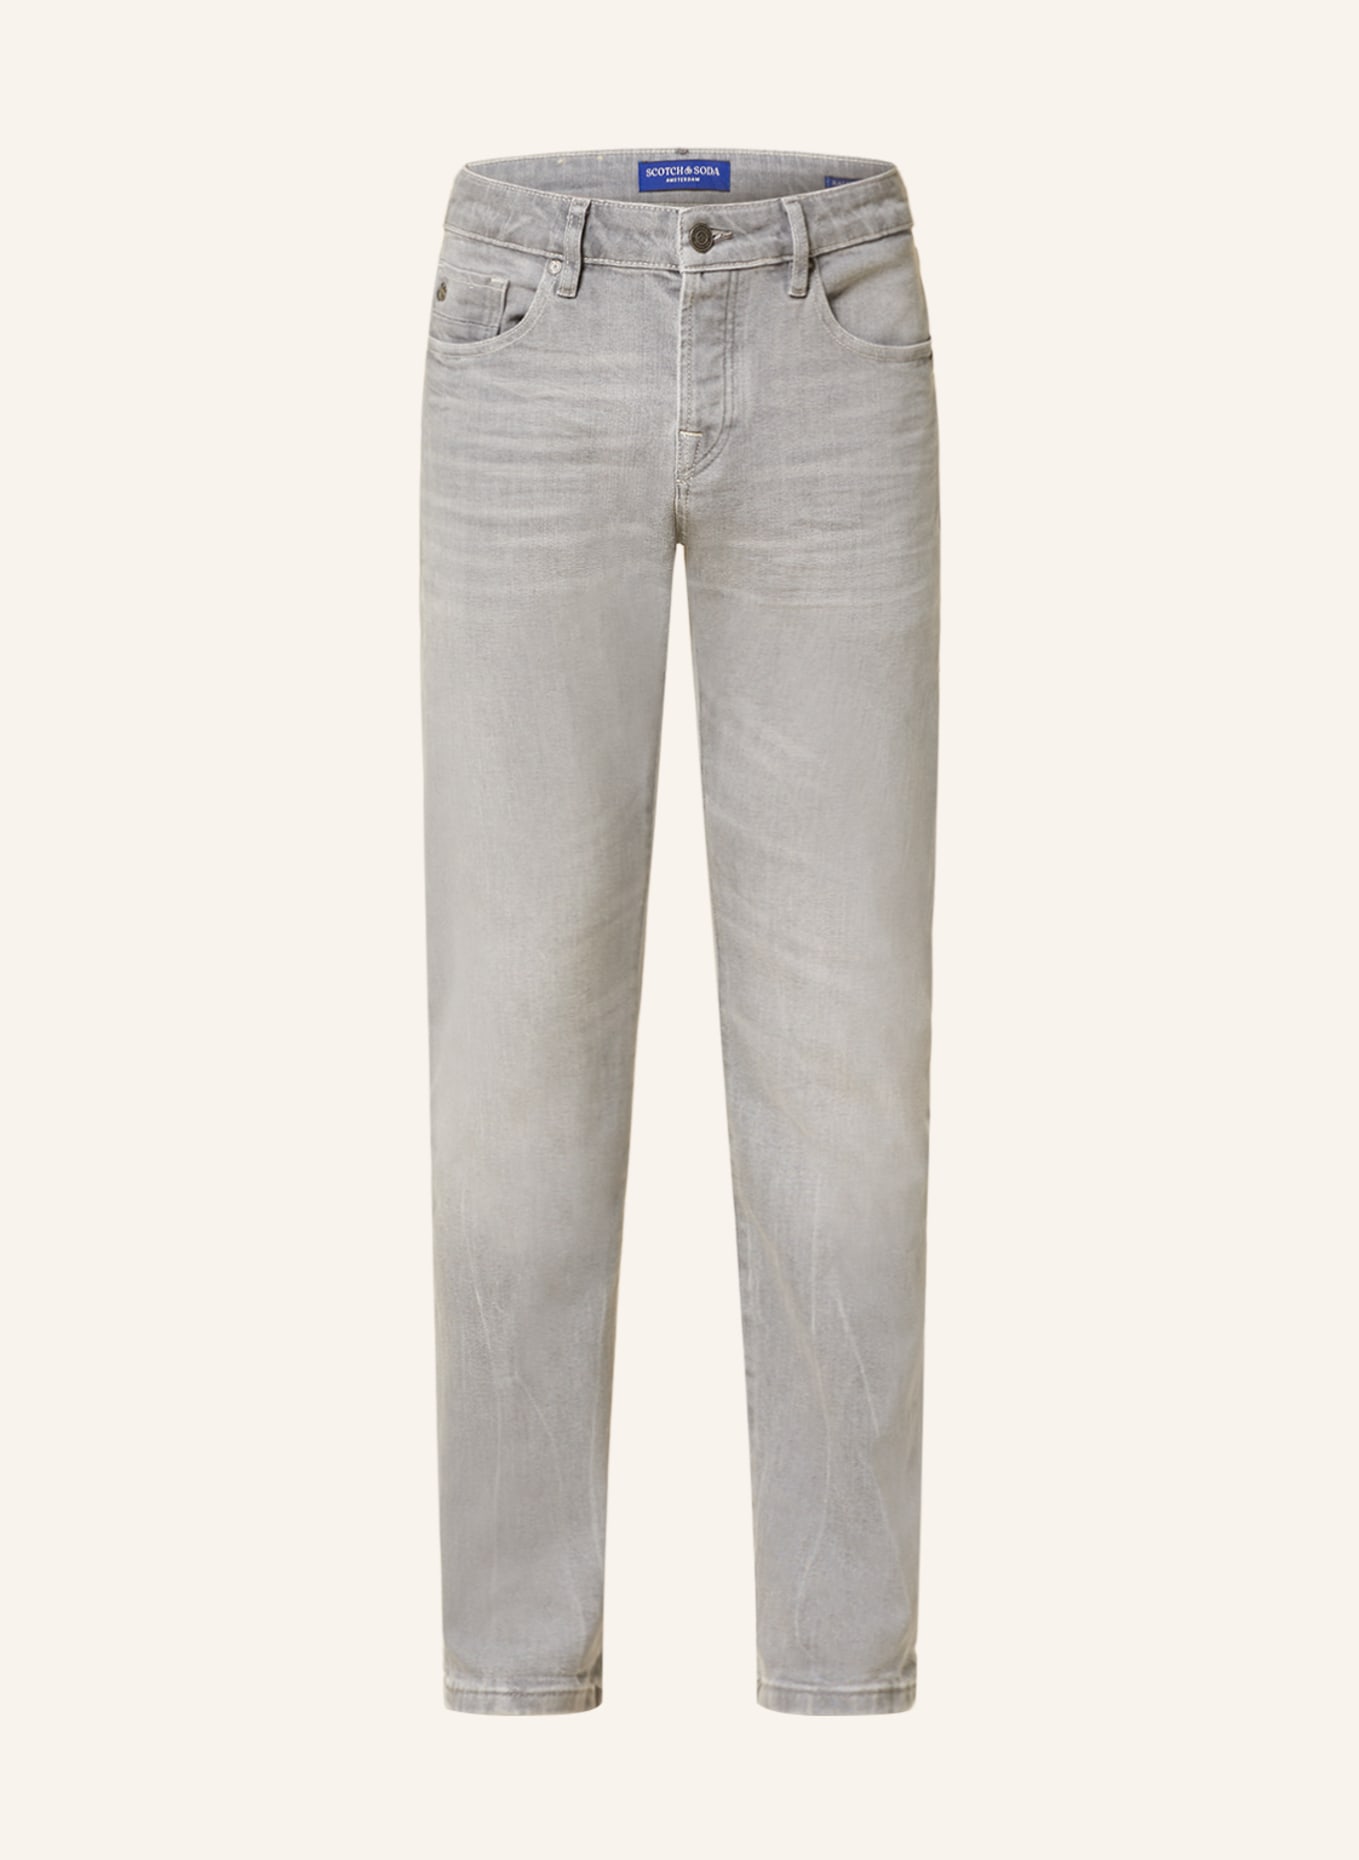 SCOTCH & SODA Jeans RALSTON Extra Slim Fit, Farbe: 0559 Stone And Sand (Bild 1)